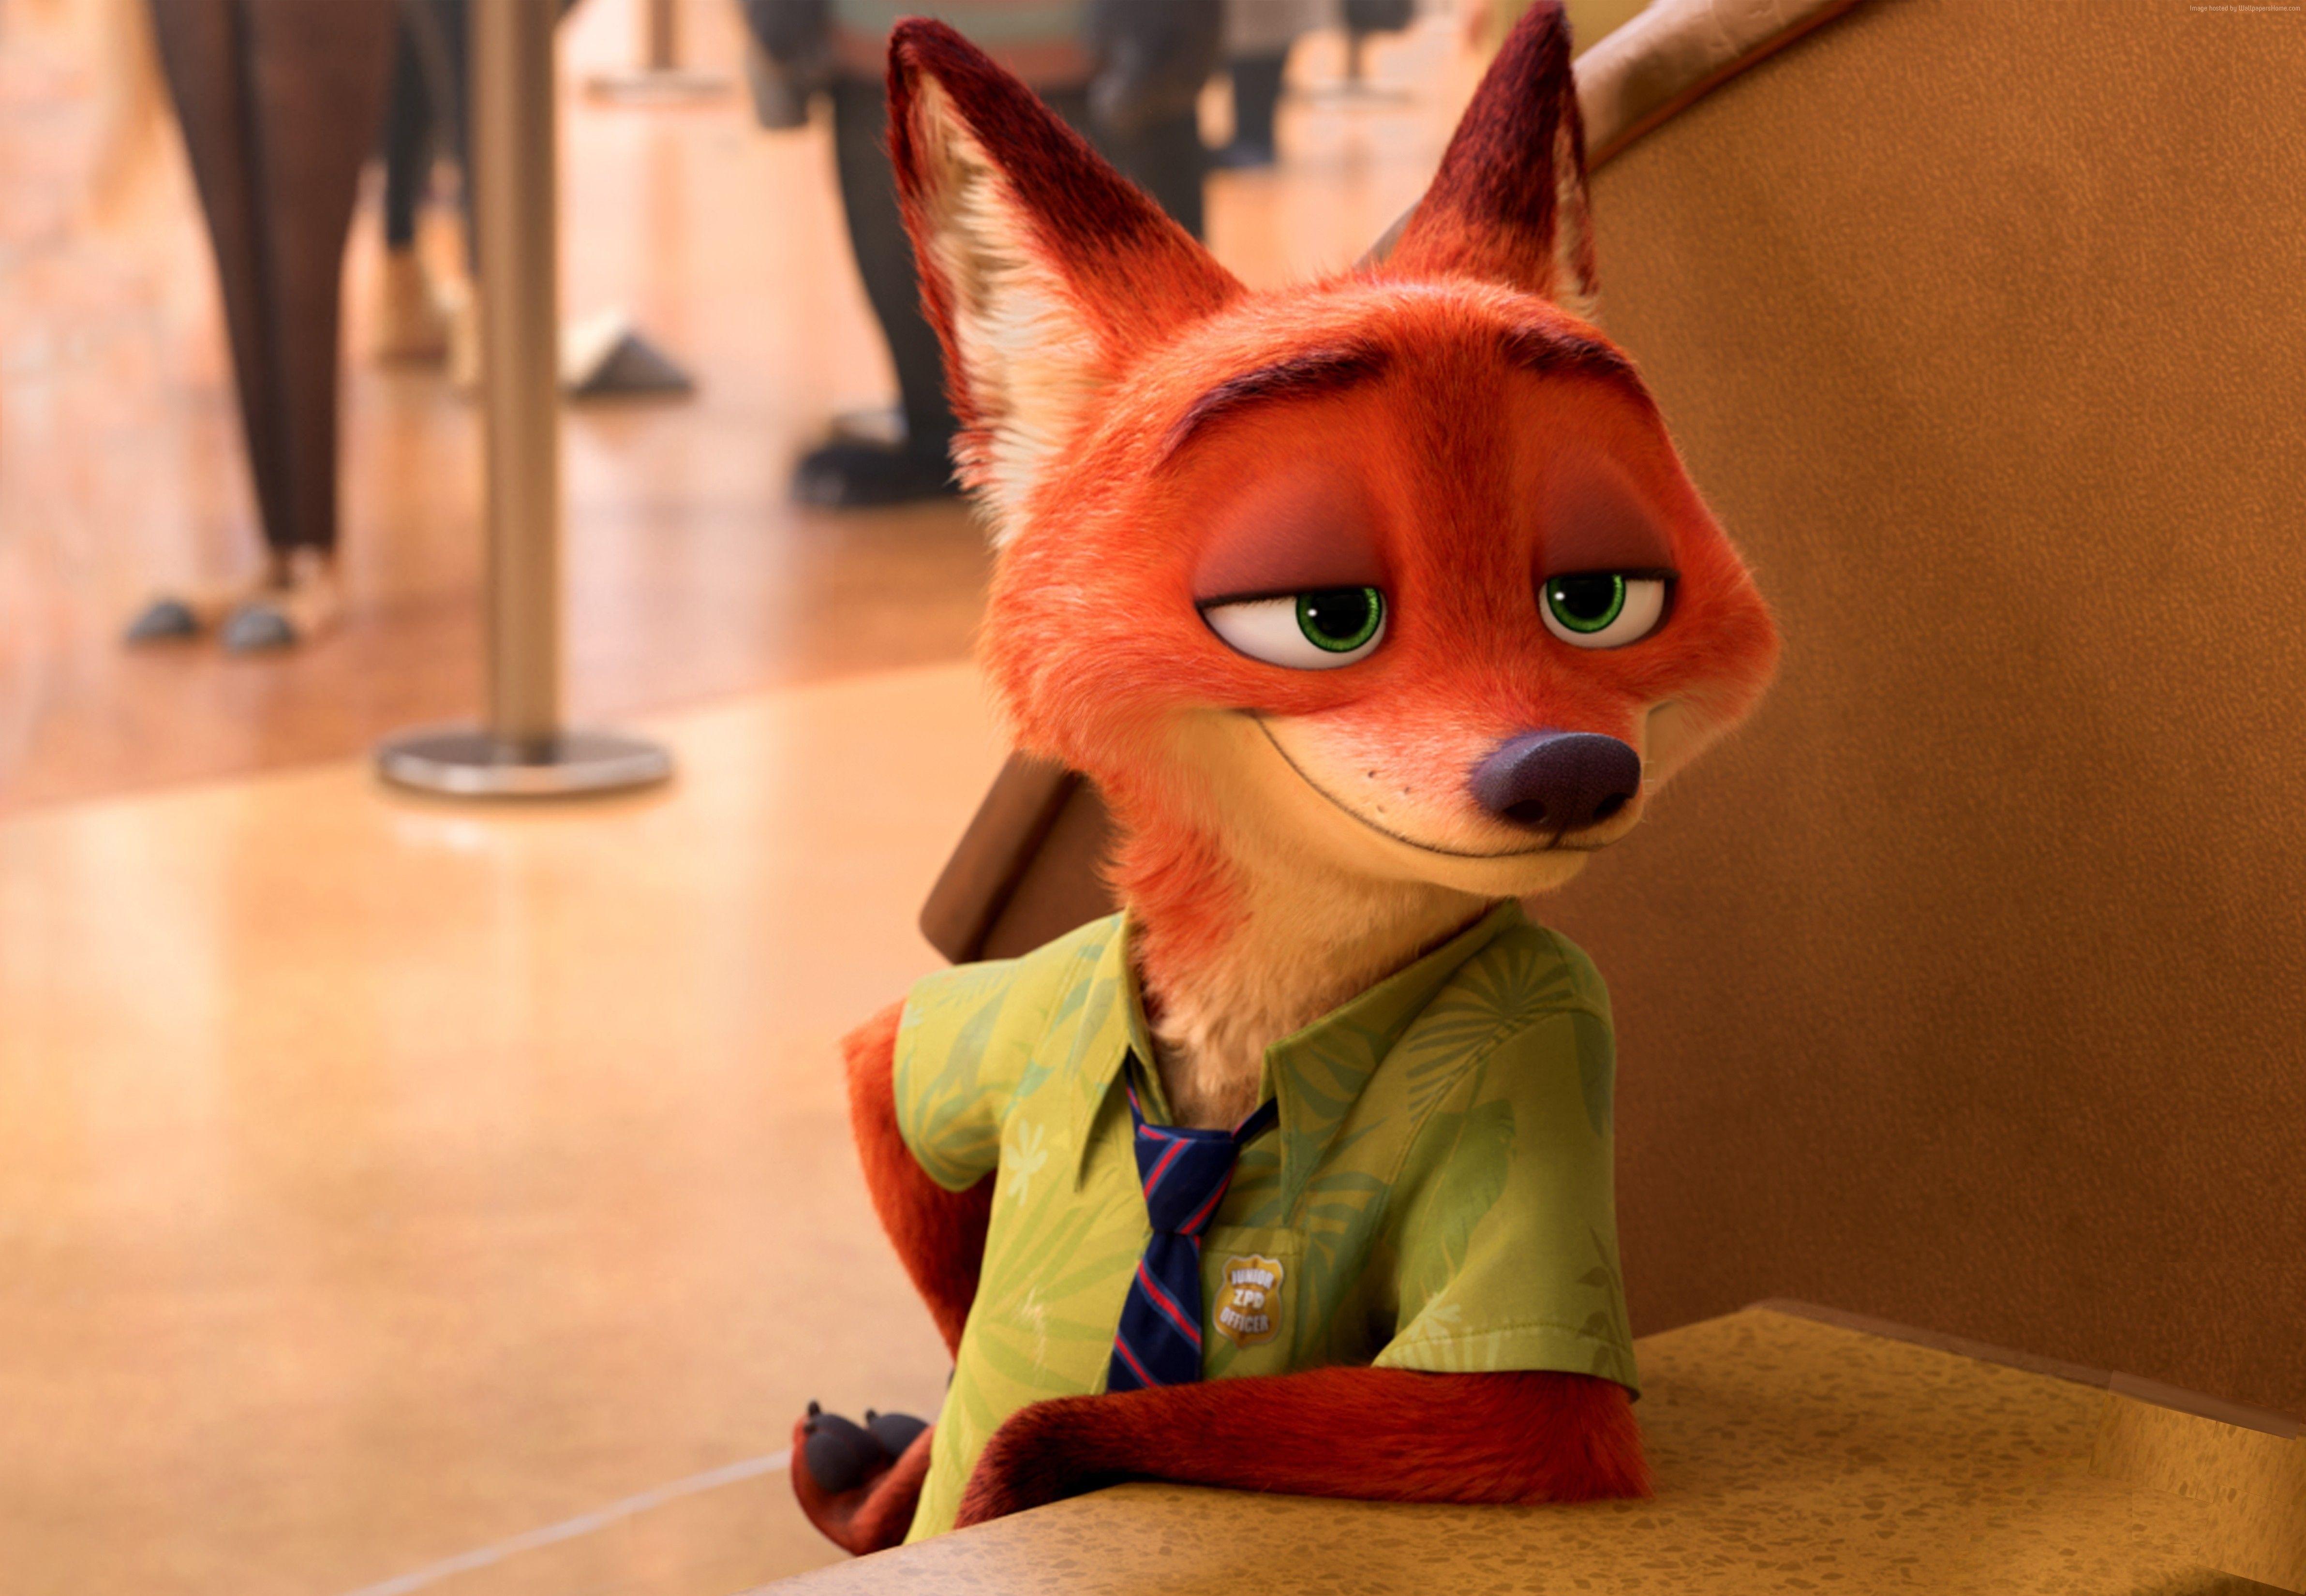 Zootopia Wallpaper, Movies: Zootopia, fox, Best Animation Movies